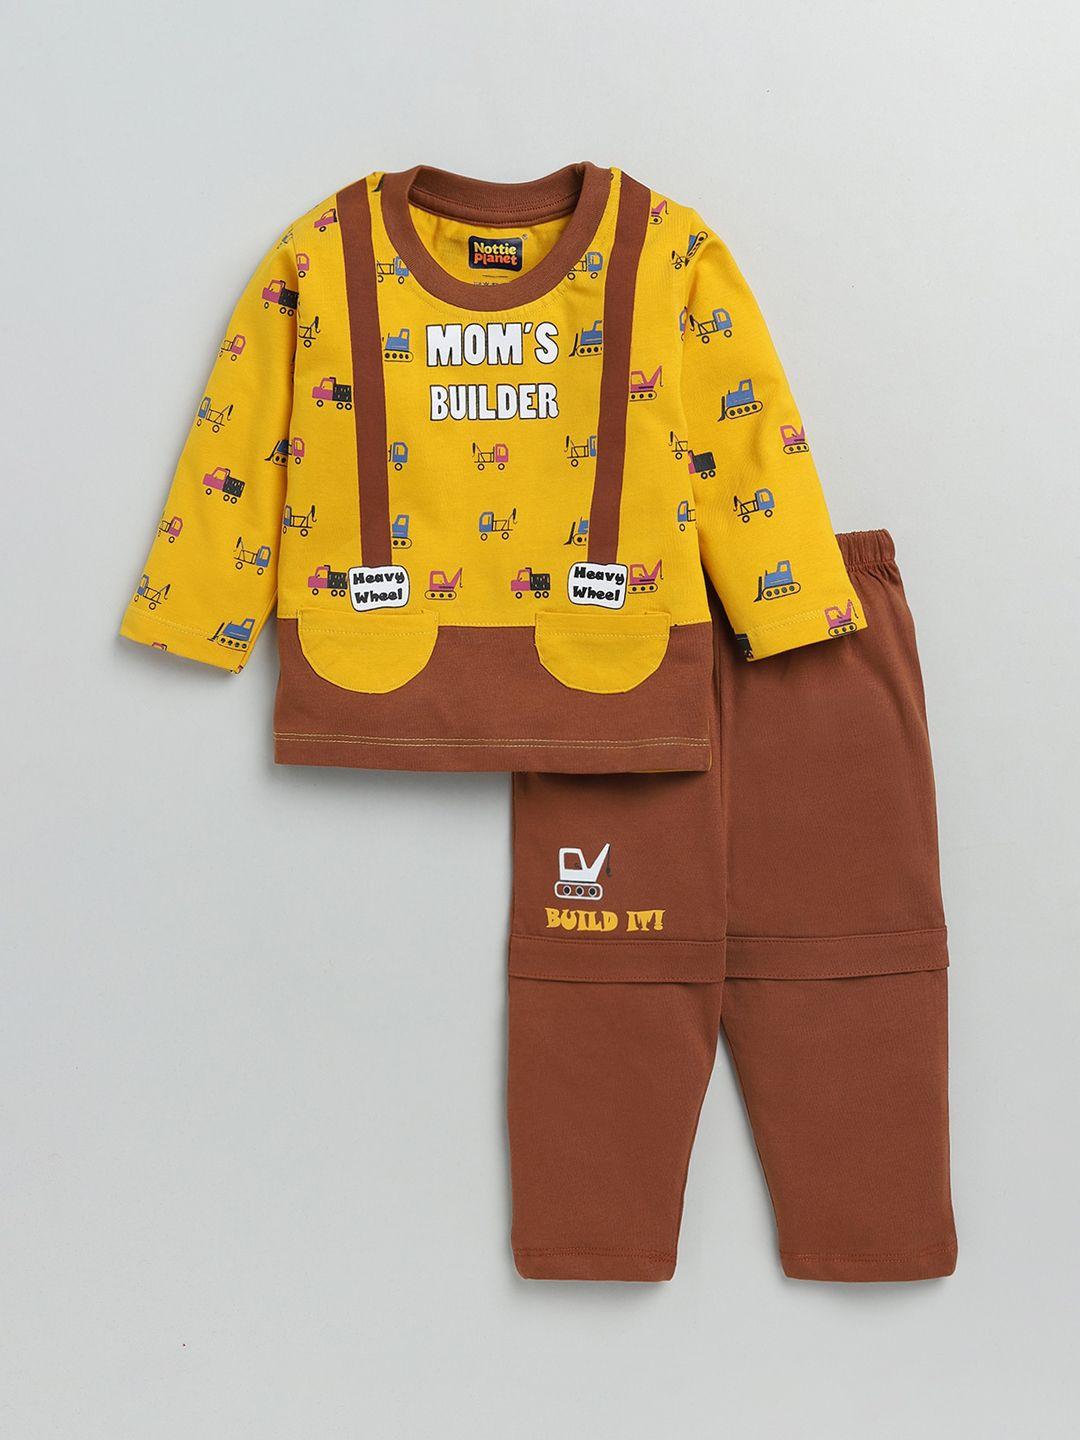 nottie planet boys yellow & brown printed cotton t-shirt with pyjamas